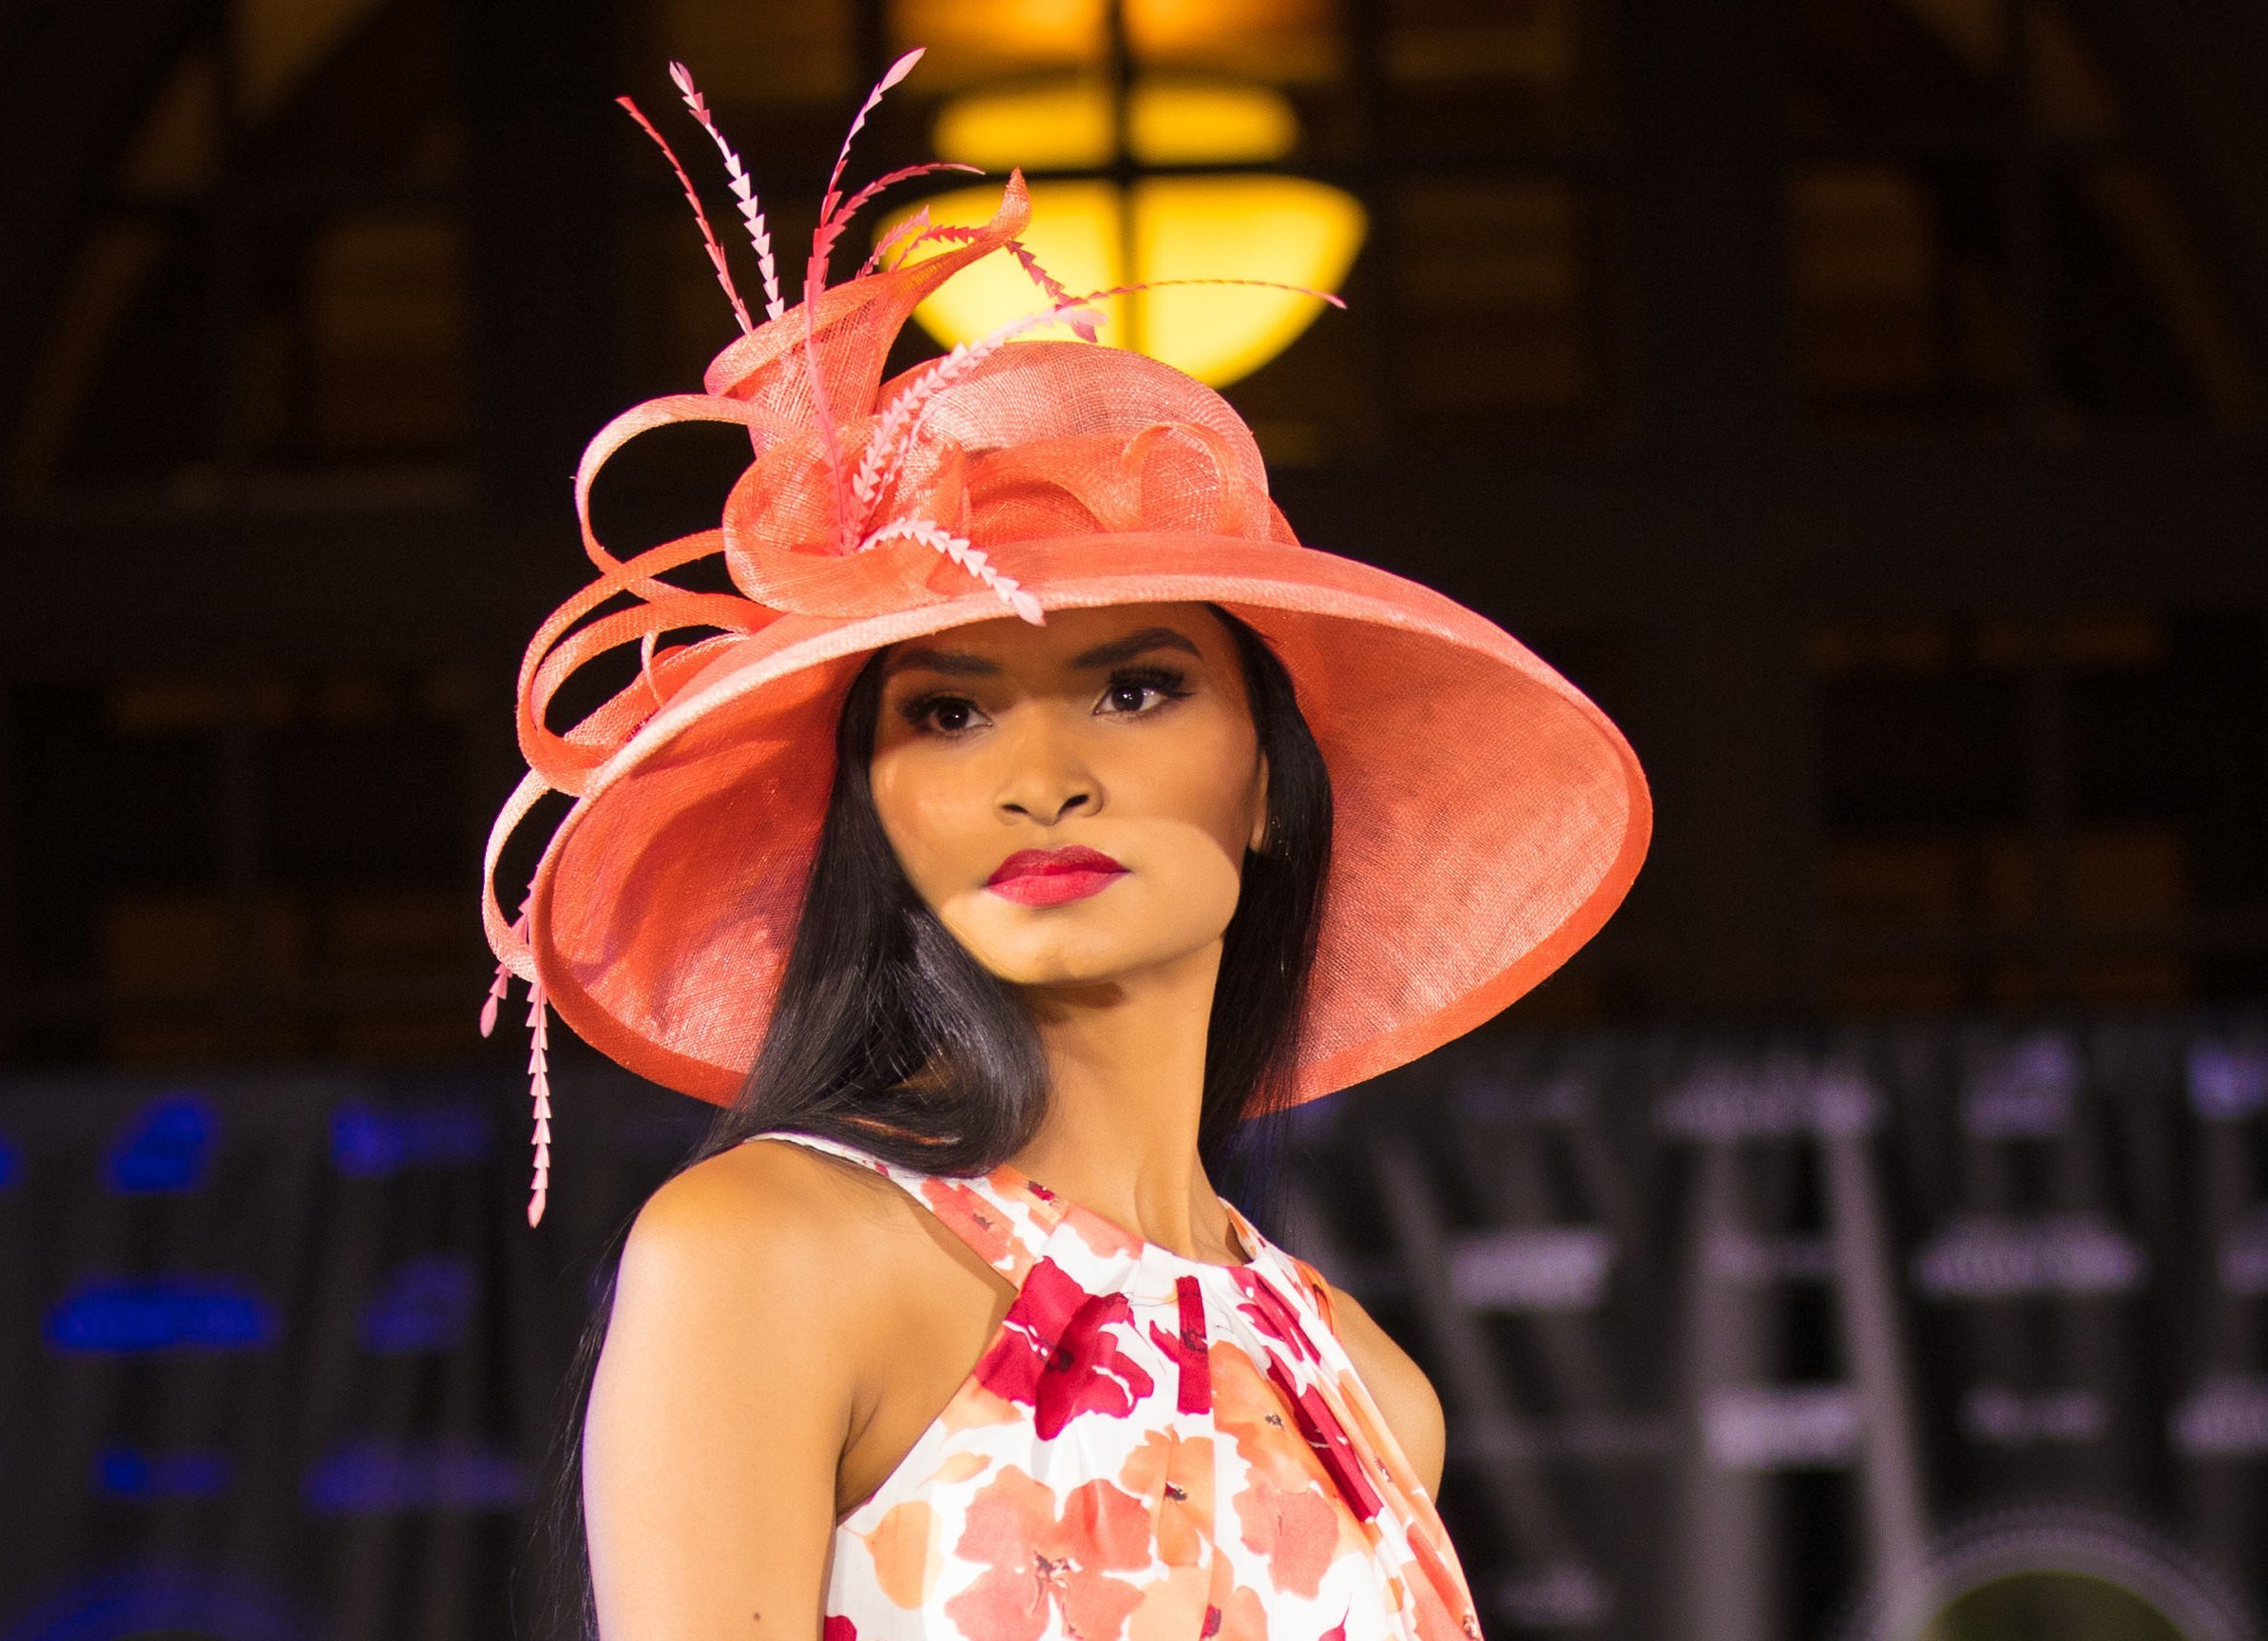 Couture Hat. Coral hat. Kentucky Derby hat. Derby hat. Royal Acot hat. Races, Wedding, Dubai fashion, Fashion, Women hat, Designer hat